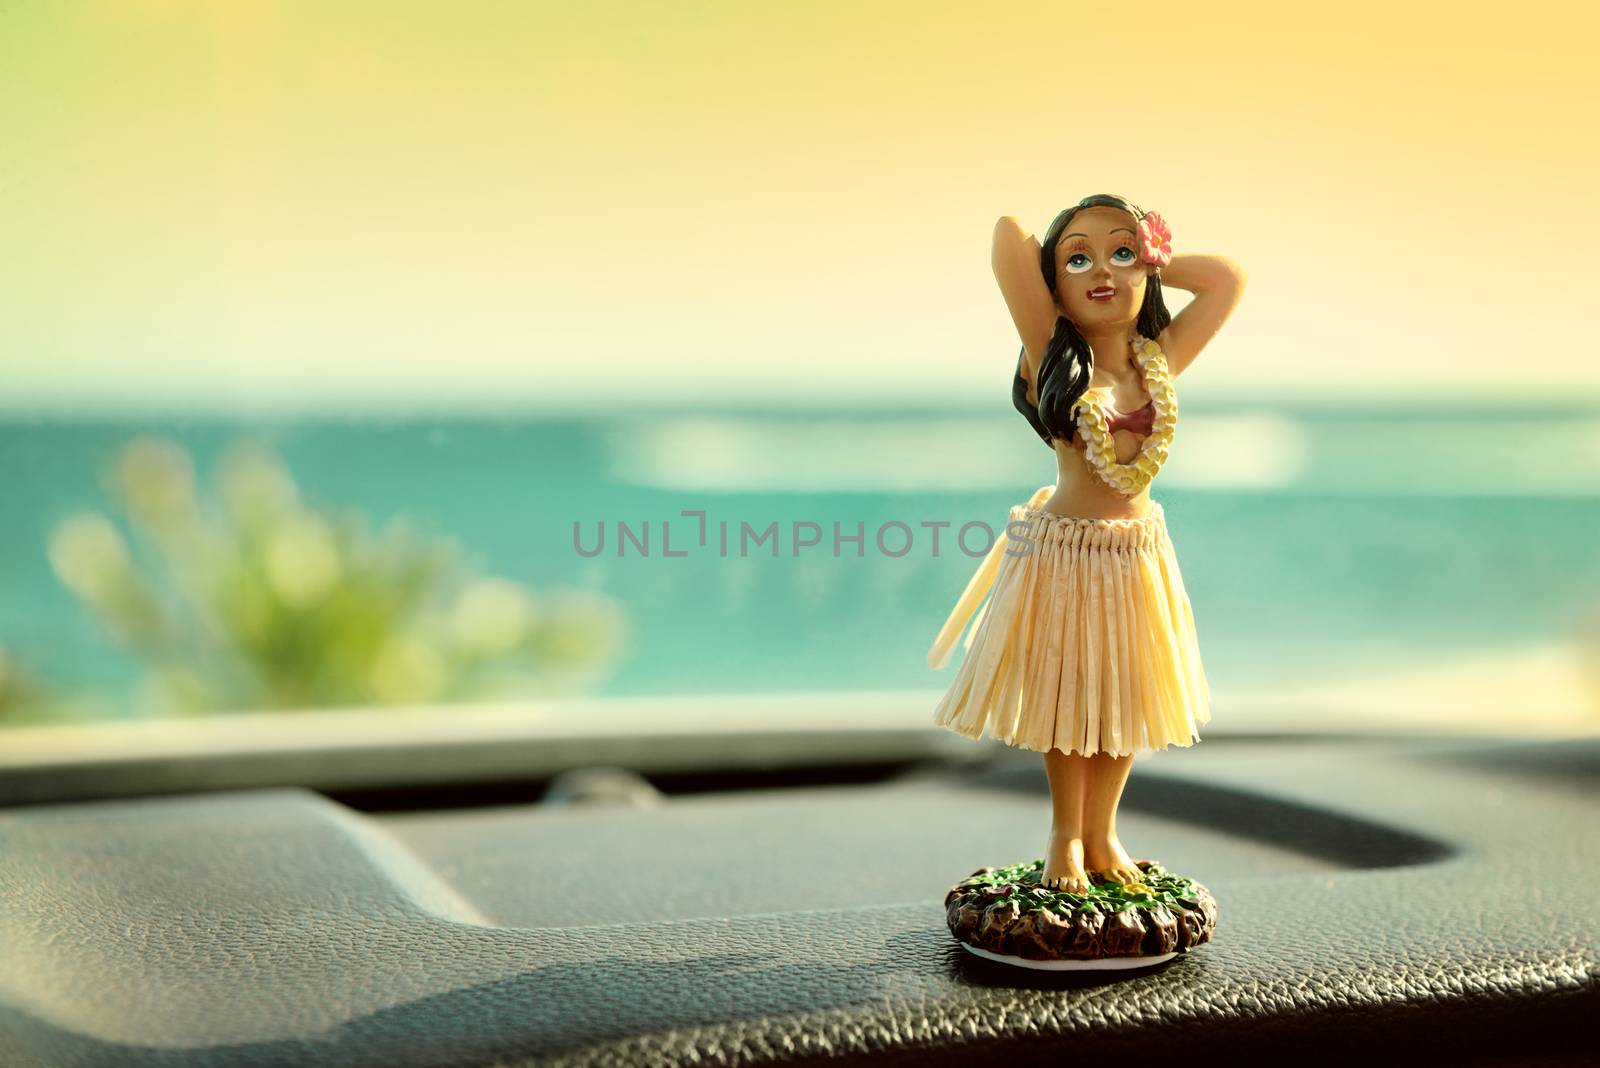 Hula dancer doll on Hawaii car road trip by Maridav